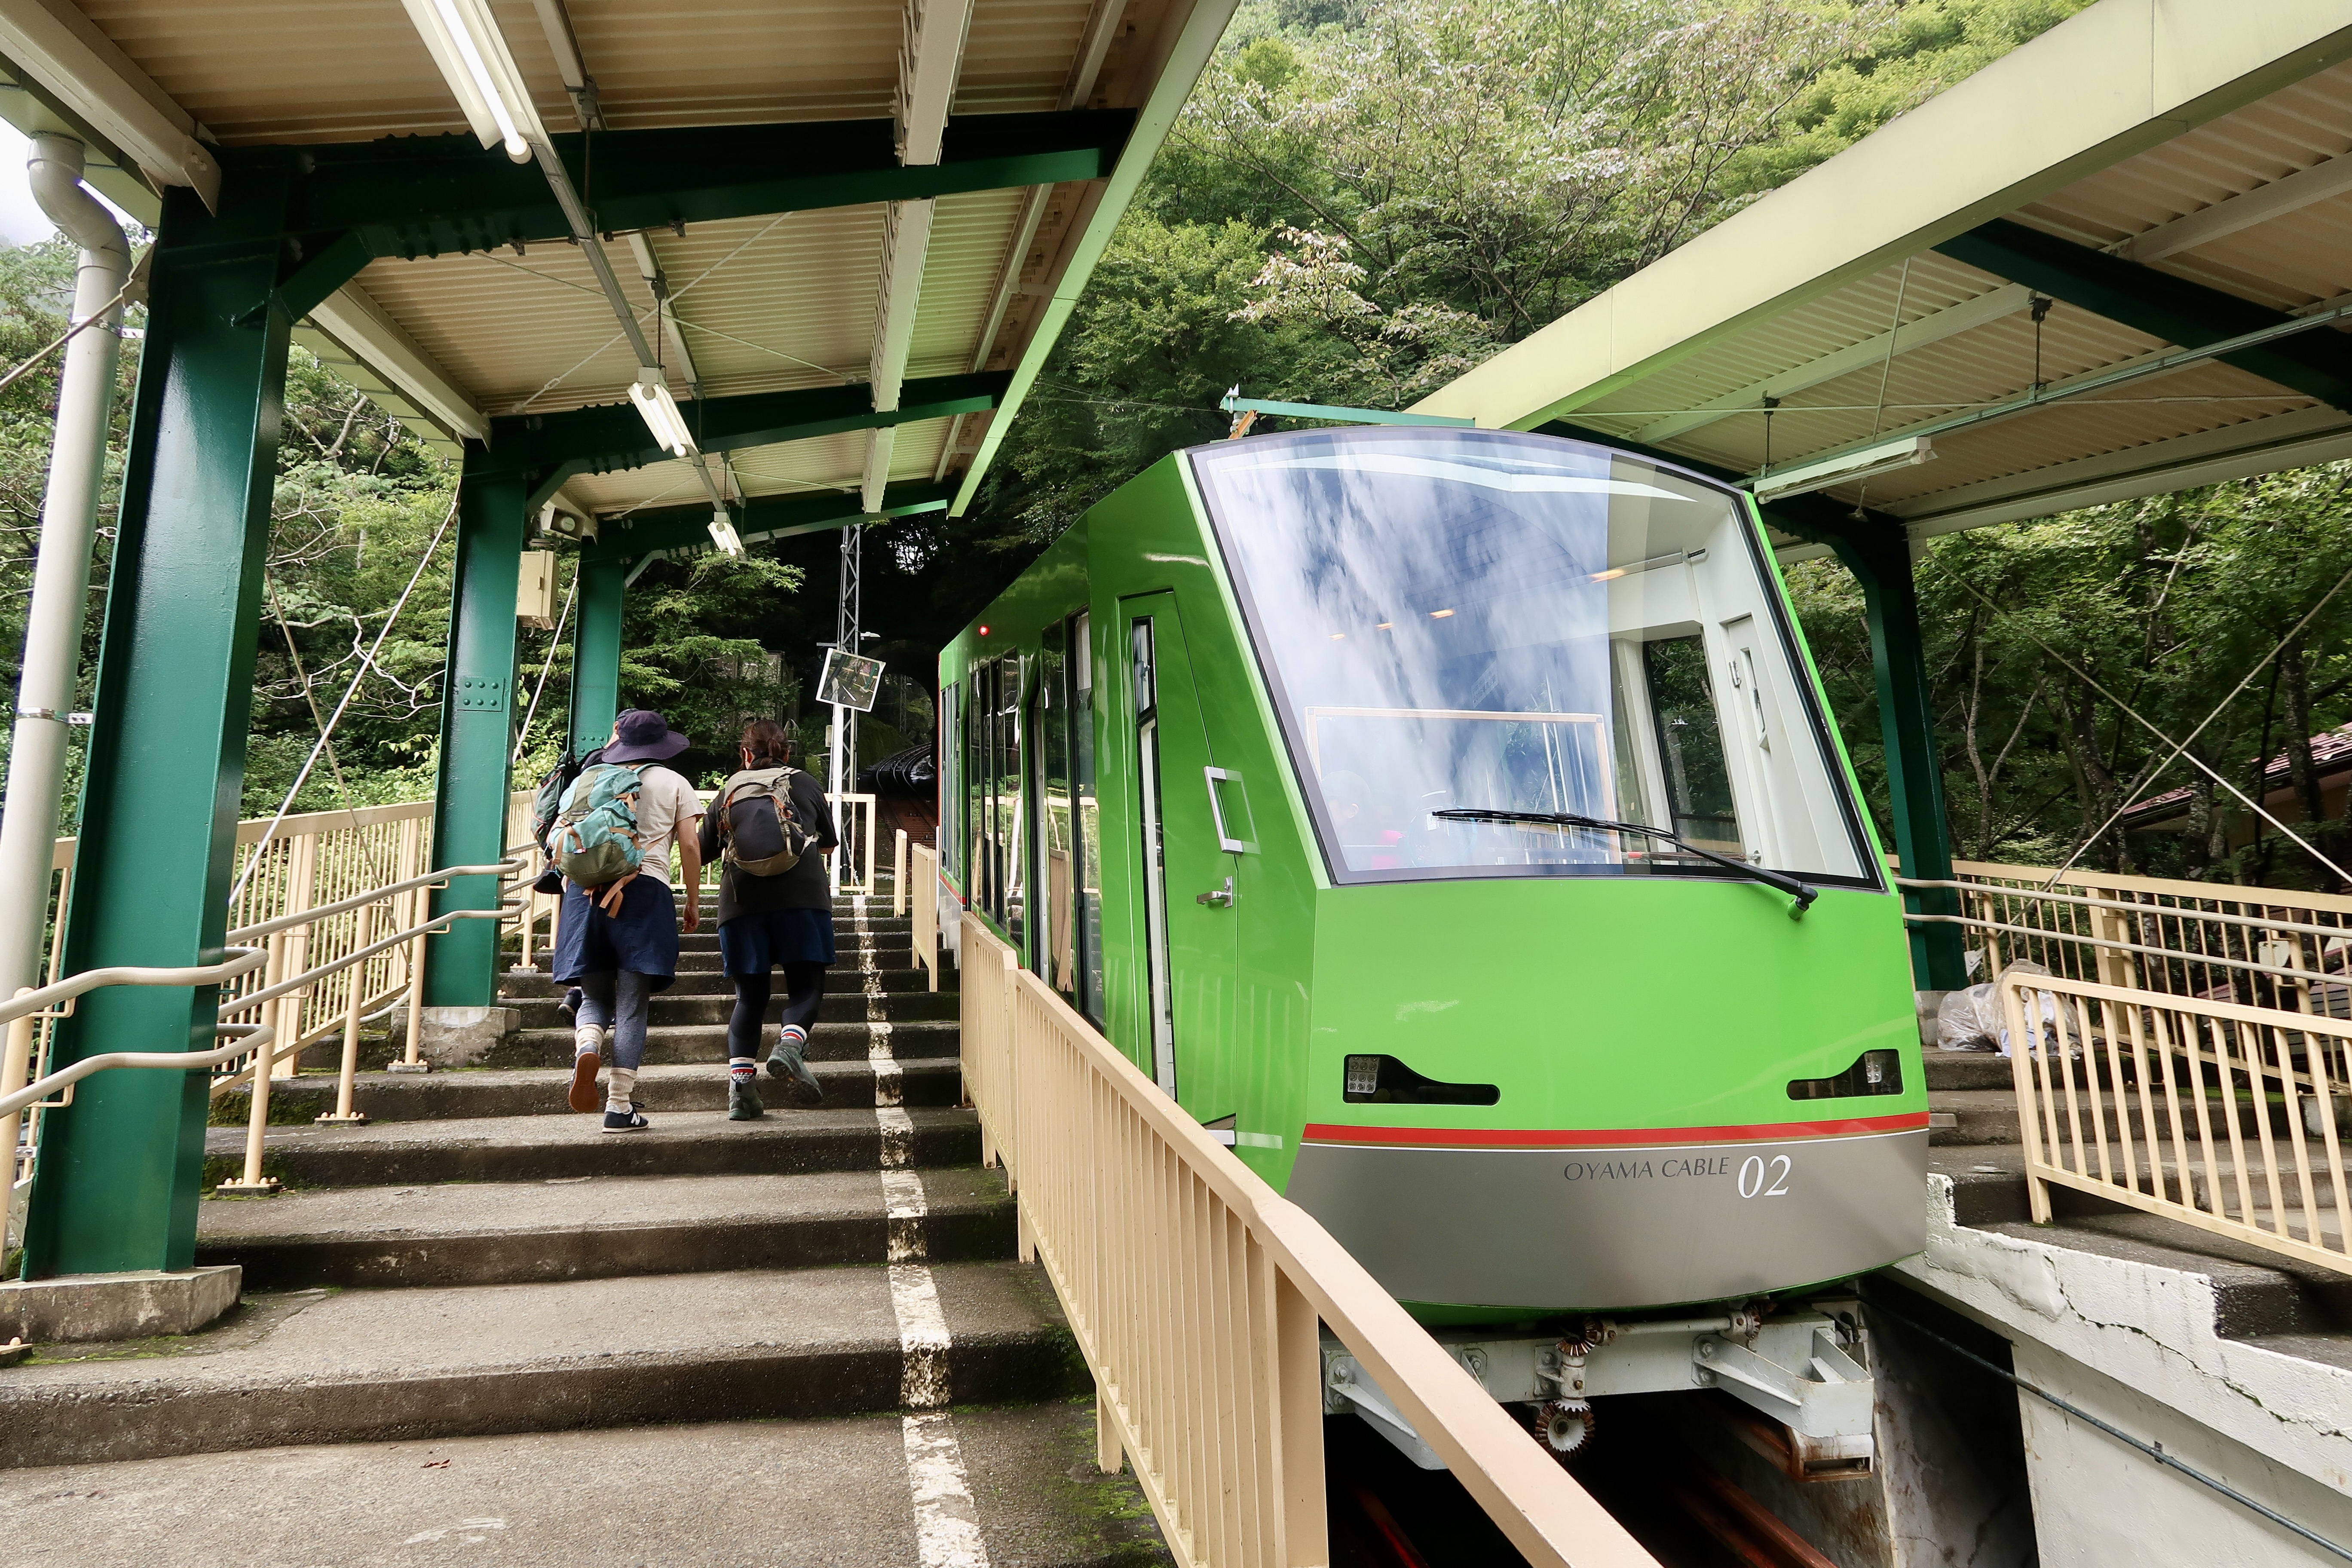 La ligne Oyama-Cable